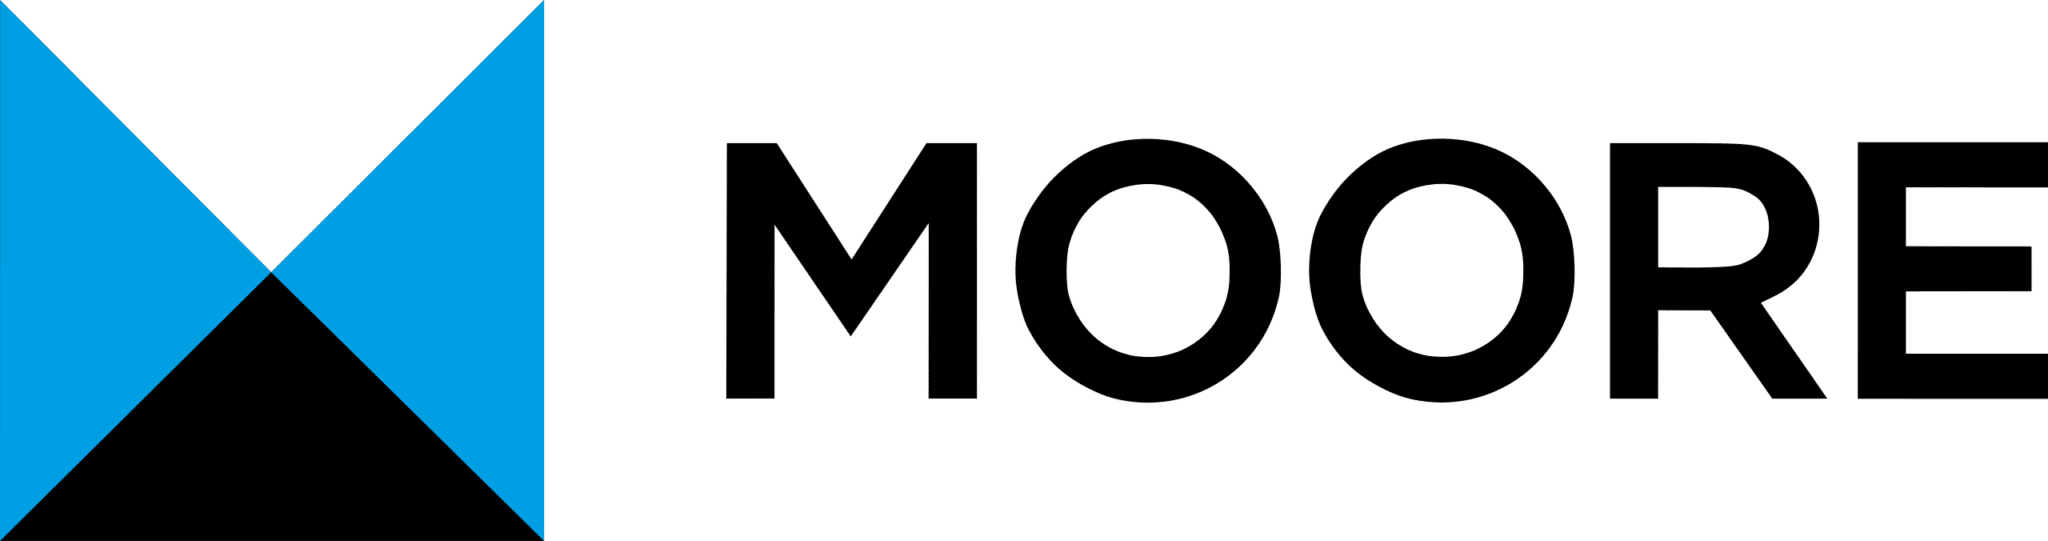 Moore Global Logo